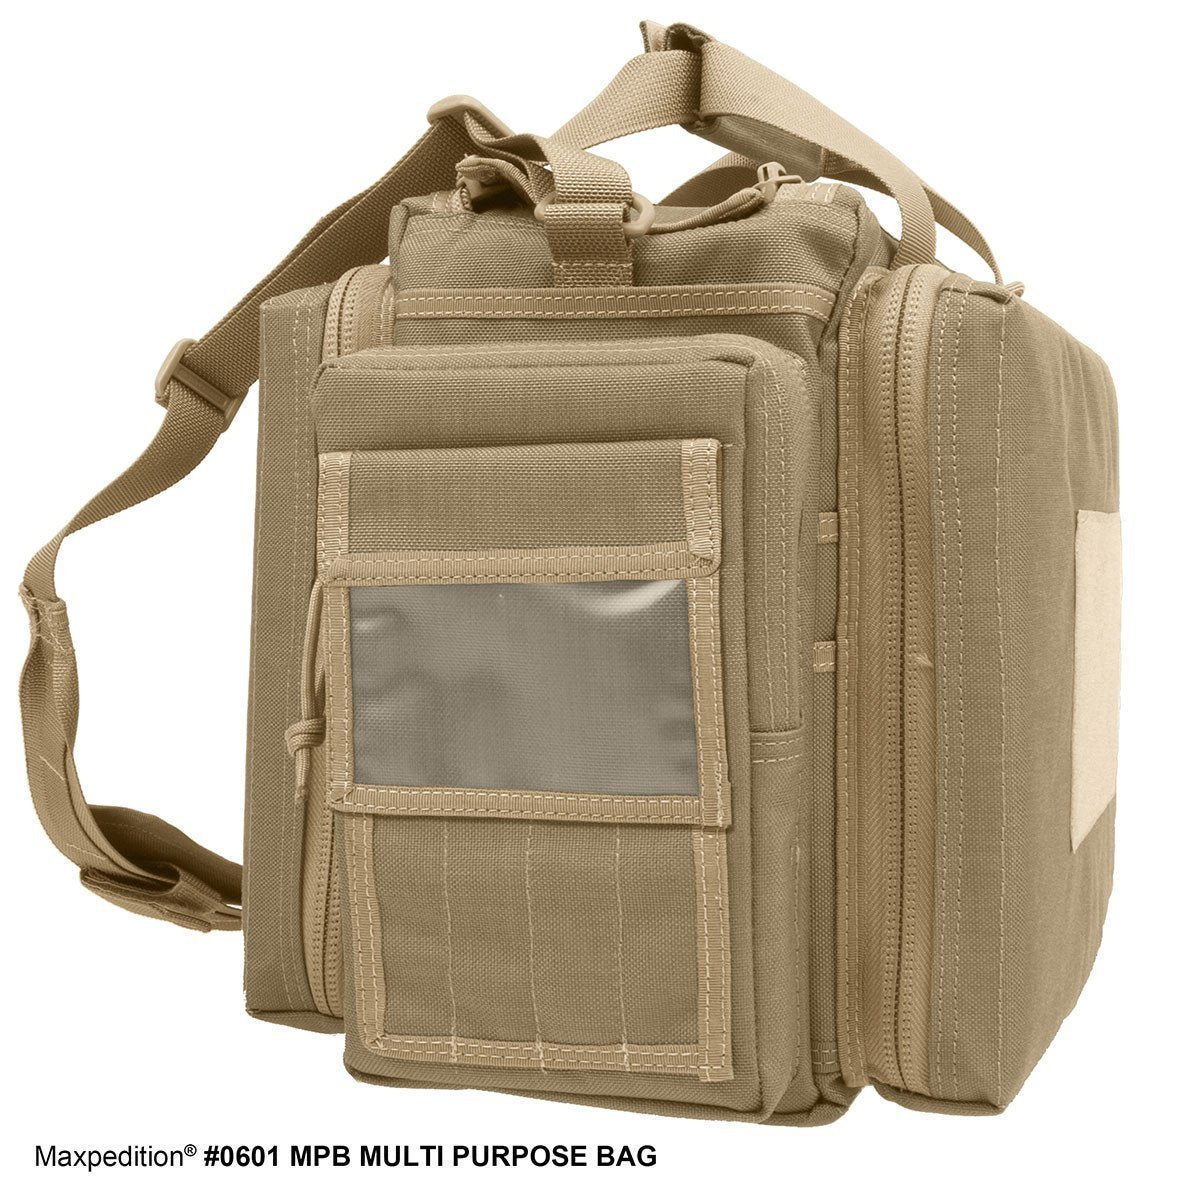 Maxpedition MPB Multi-Purpose Bag - Black